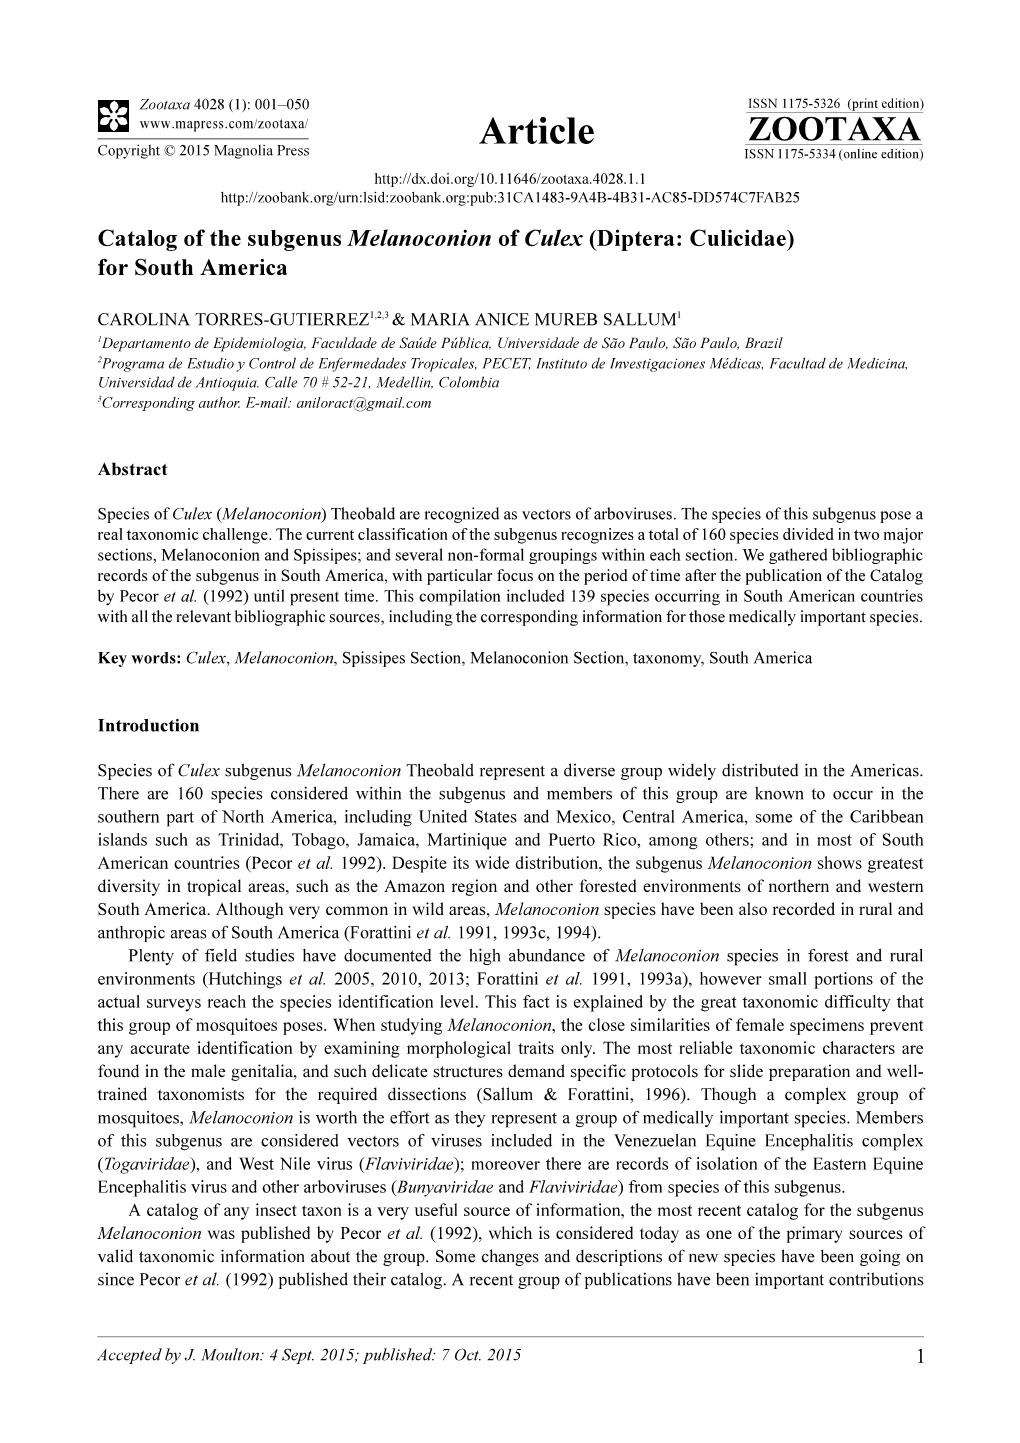 Catalog of the Subgenus Melanoconion of Culex (Diptera: Culicidae) for South America